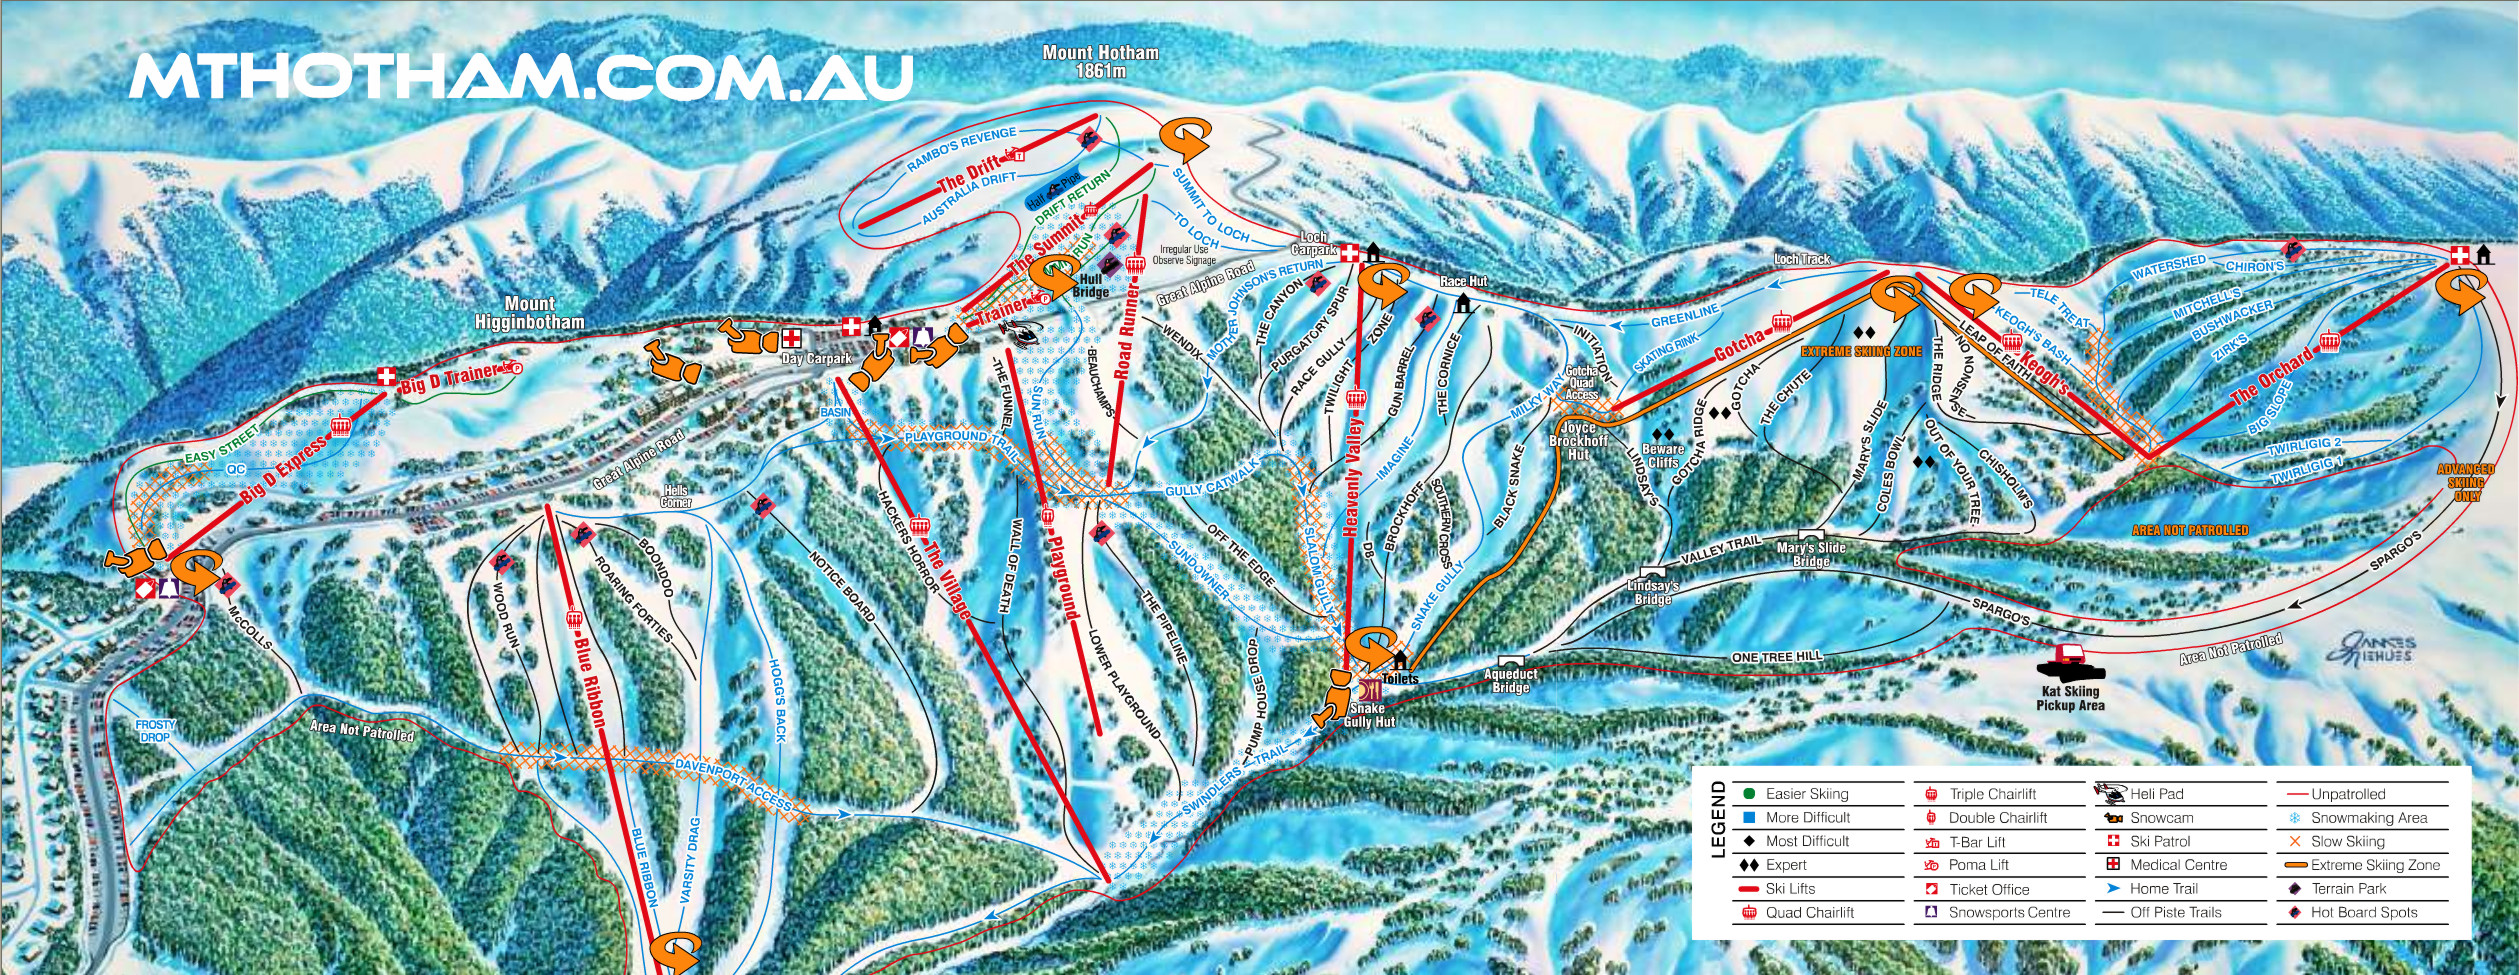 Mount Hotham Ski Trail Map - Harrietville Australia * mappery.